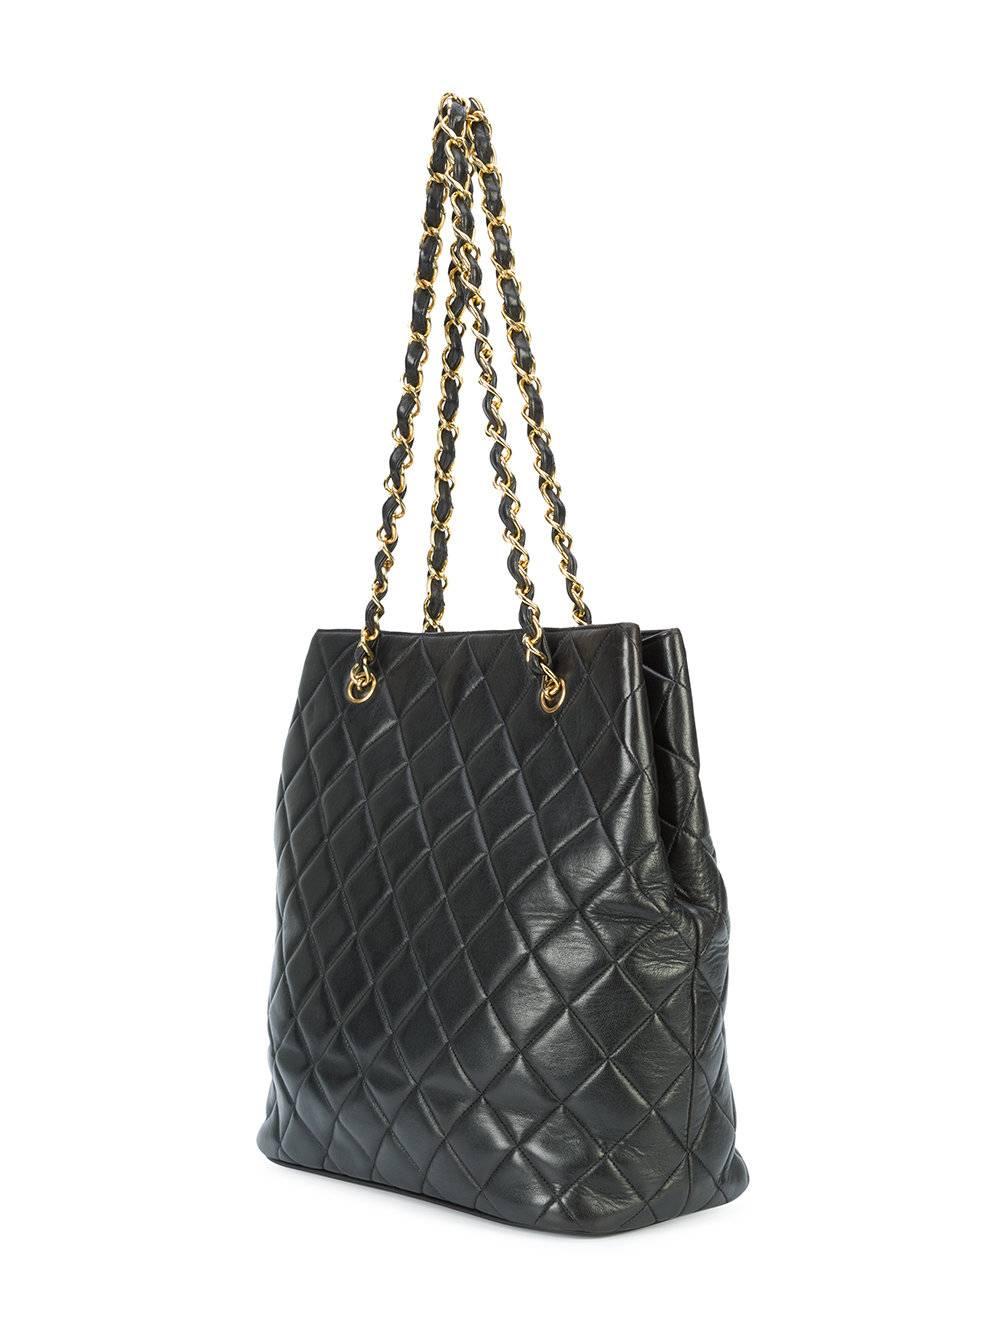 Chanel Black Lambskin Leather Gold Shopper Shoulder Carryall Tote Bag in Box 2